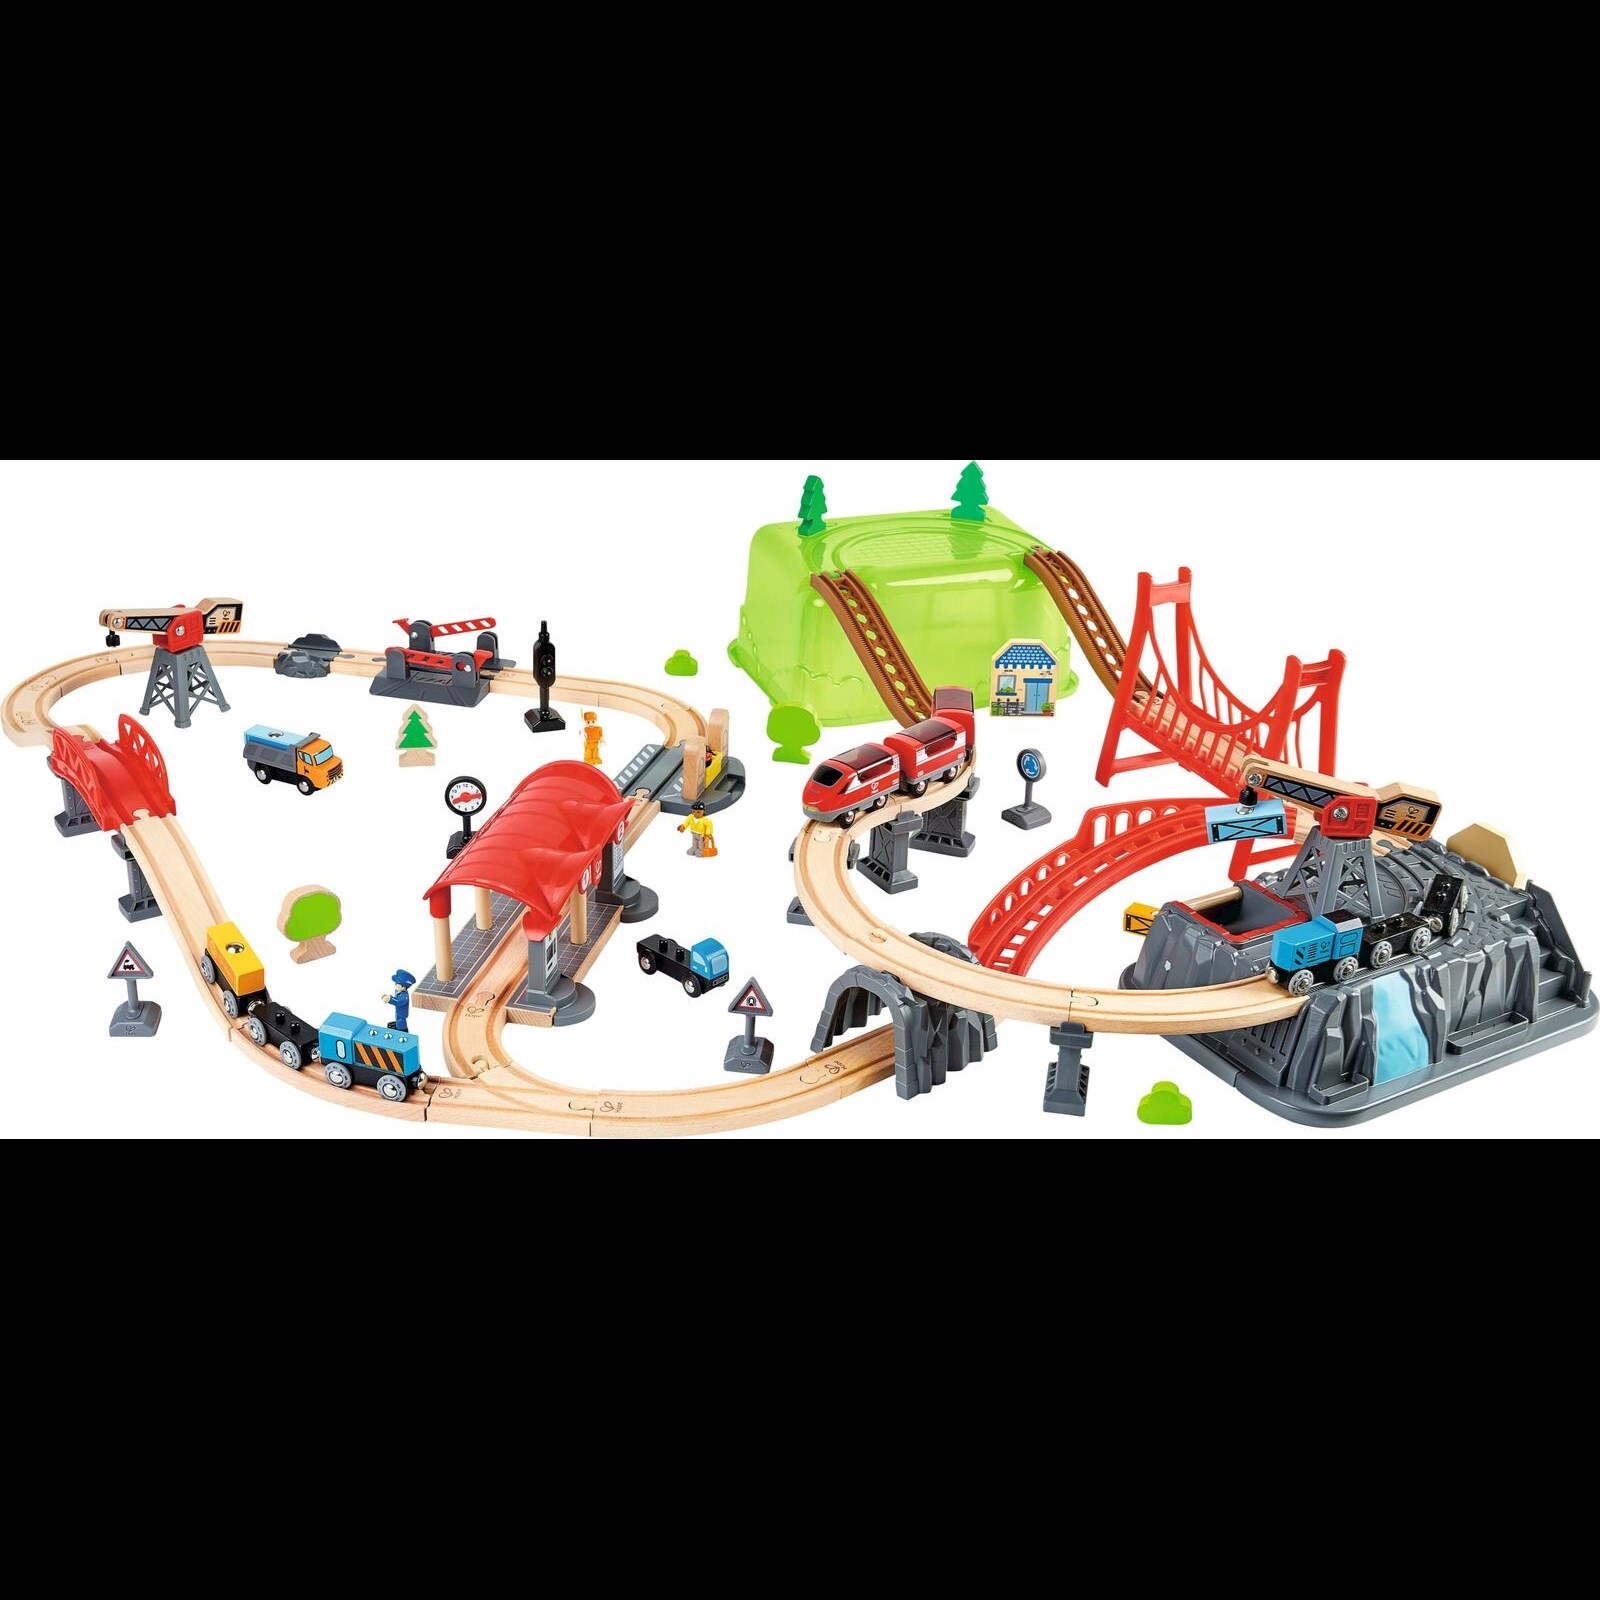 Indoor - Holzeisenbahn LANDI kaufen - Baukasten Set Kinderspielzeug